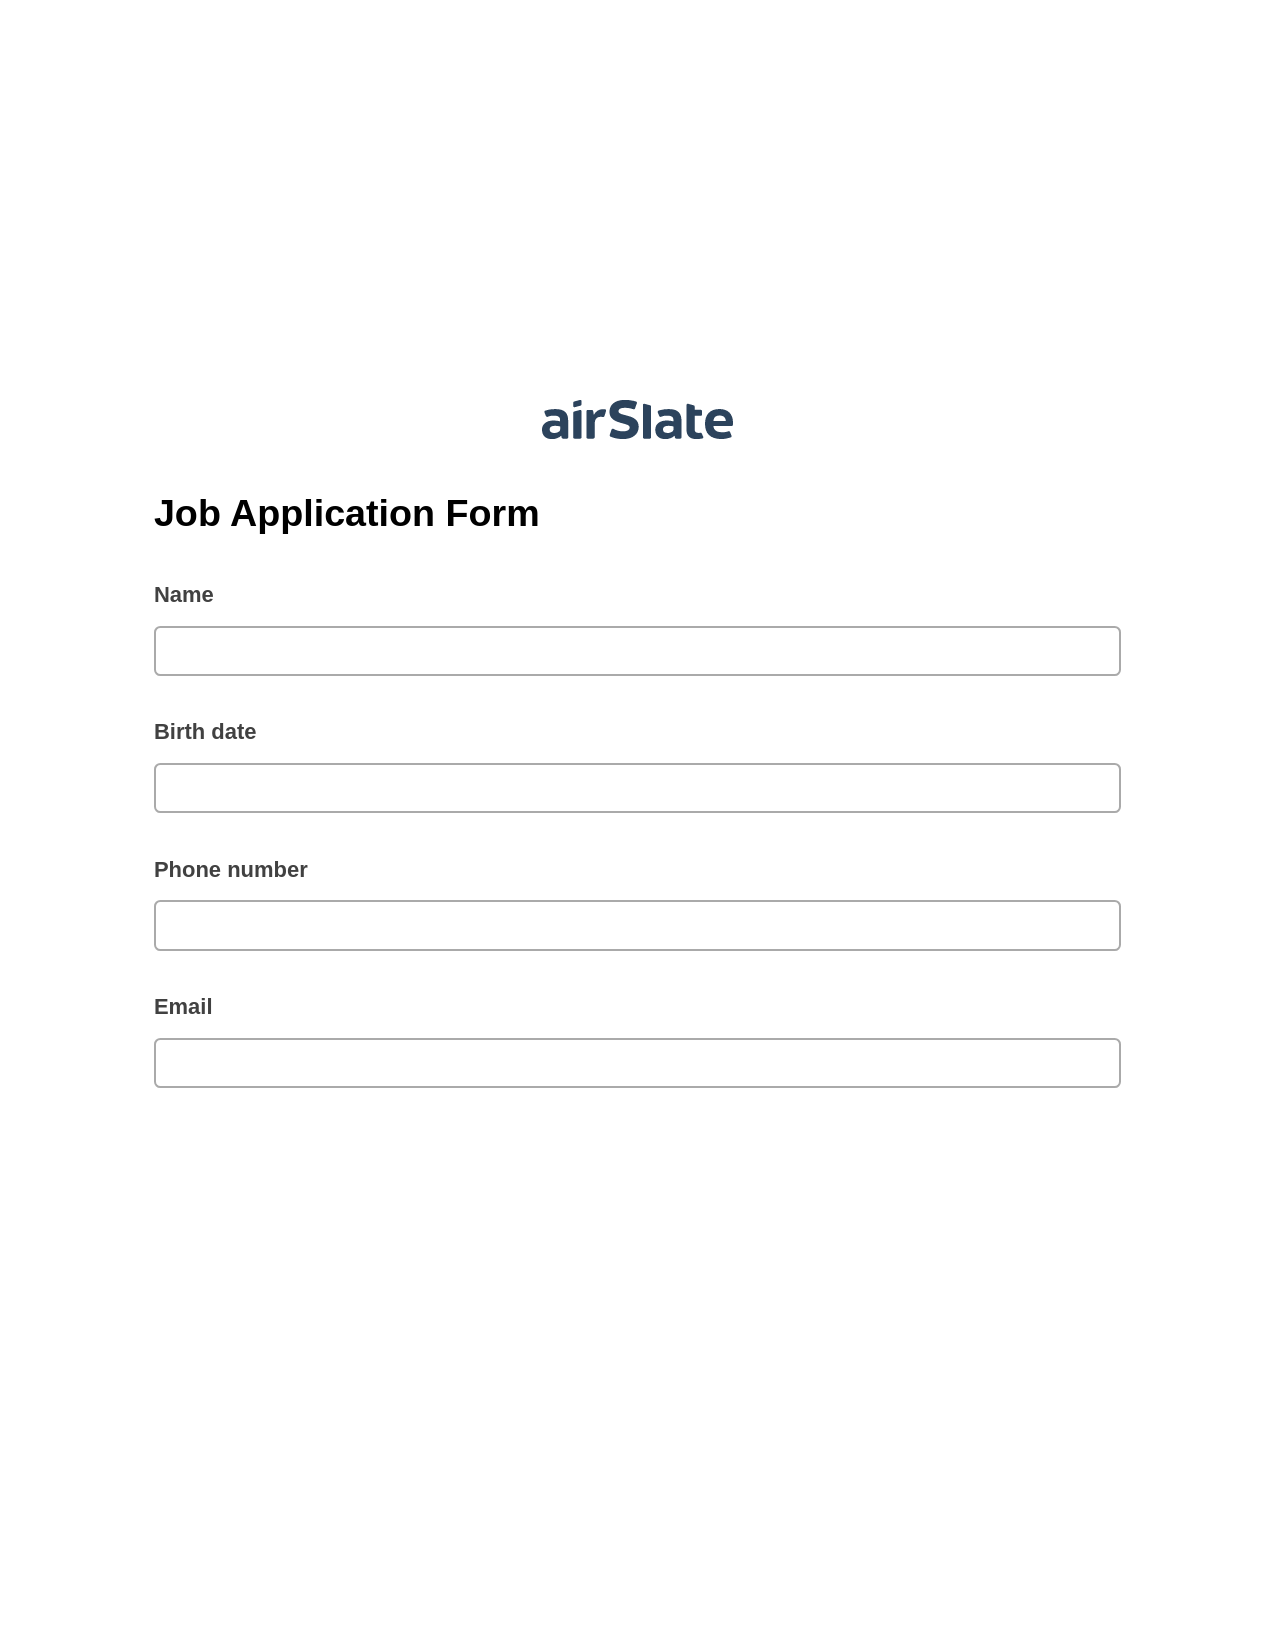 Job Application Form Pre-fill from MySQL Bot, Google Cloud Print Bot, OneDrive Bot